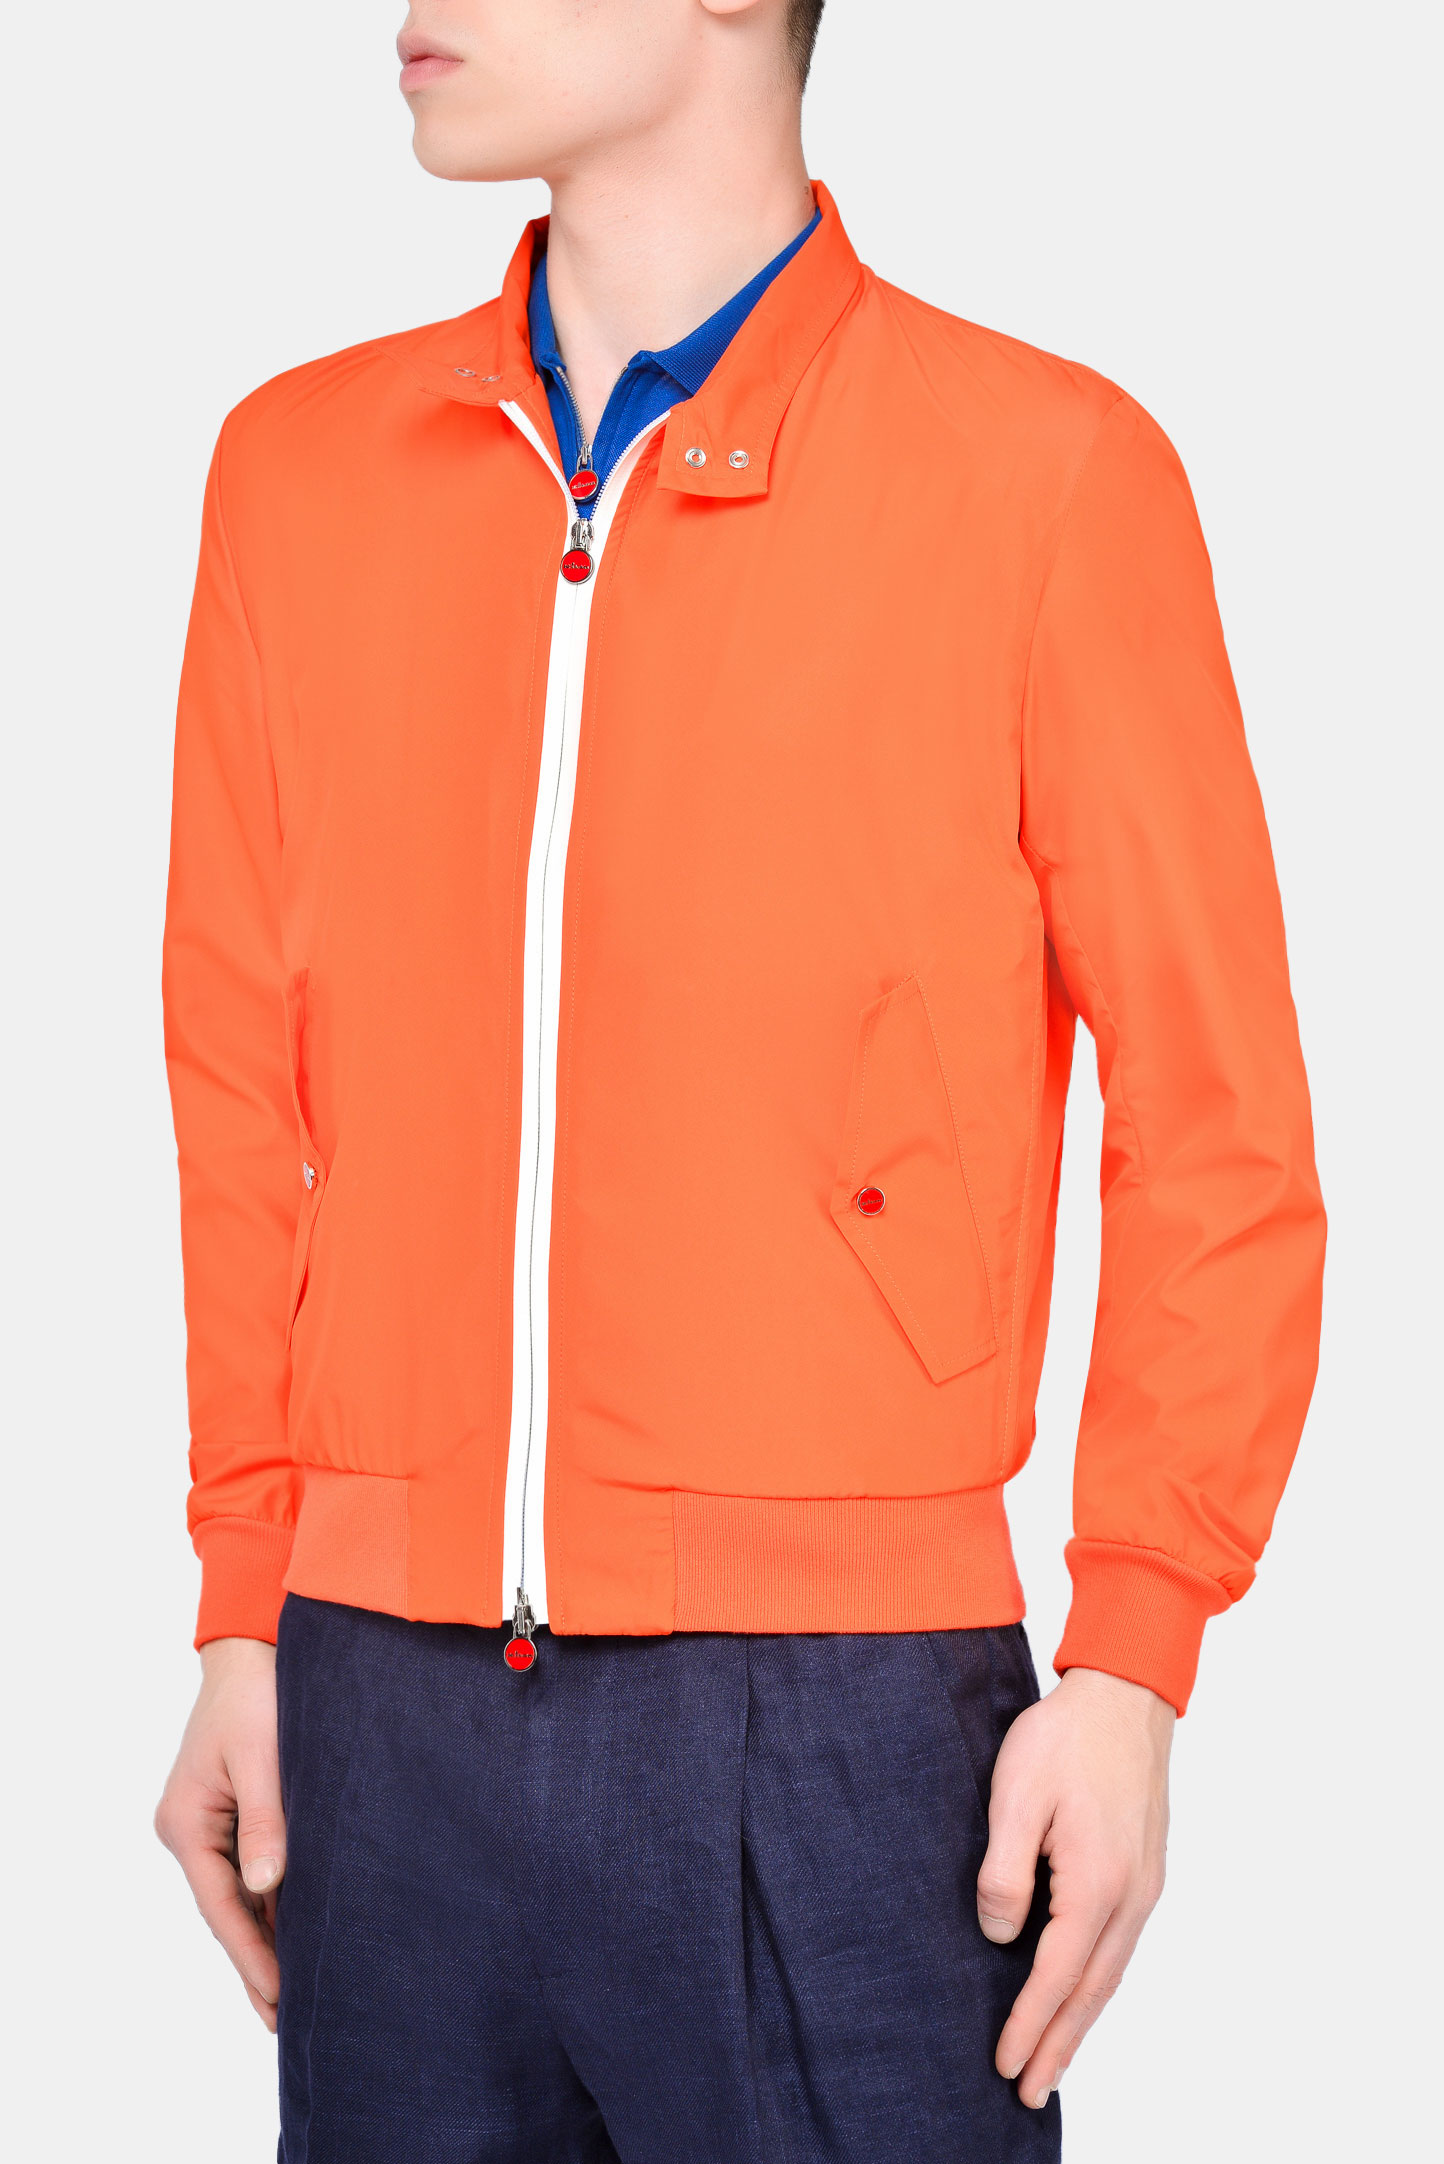 Куртка KITON UBLM03X08S170, цвет: Оранжевый, Мужской